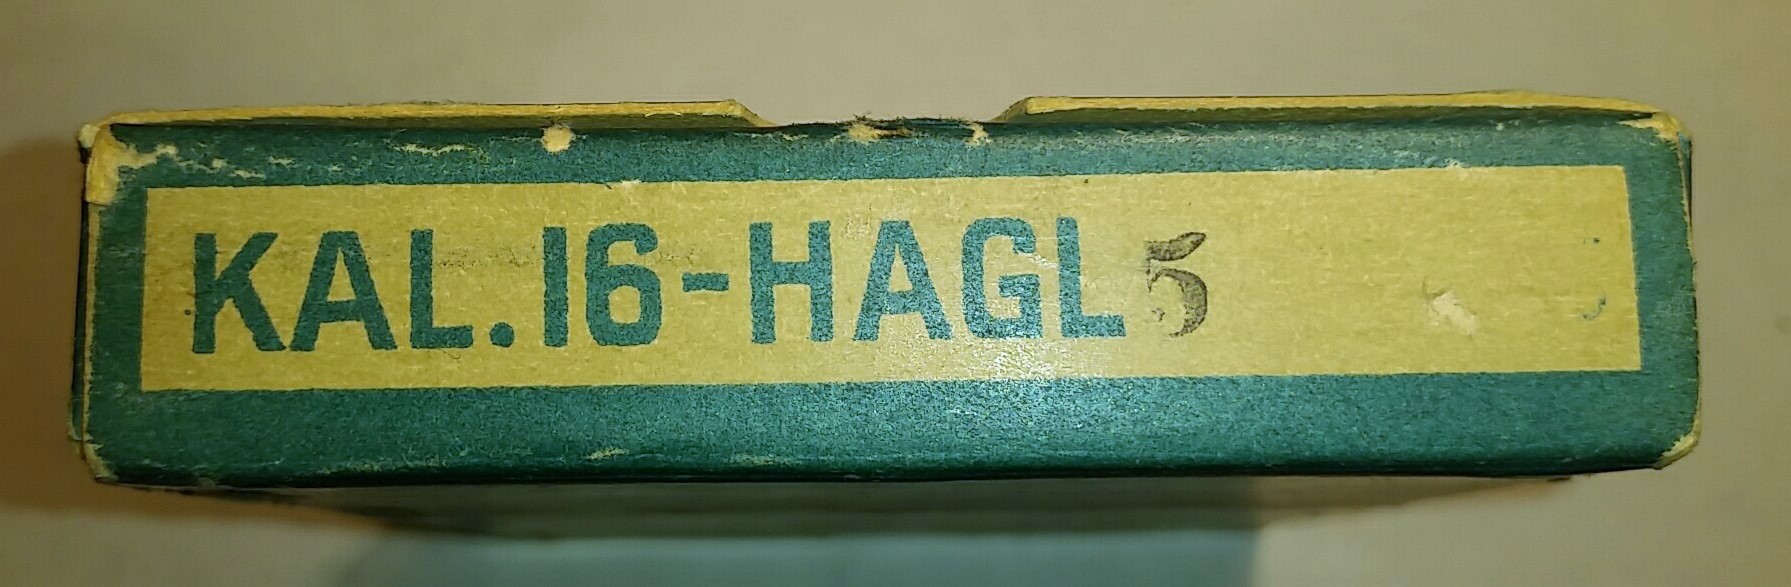 ./ammo/hagle/esker/Eske-Hagle-Nitedals-Spesial-Blaa-16-65-Nr5-10skudd-3.jpg